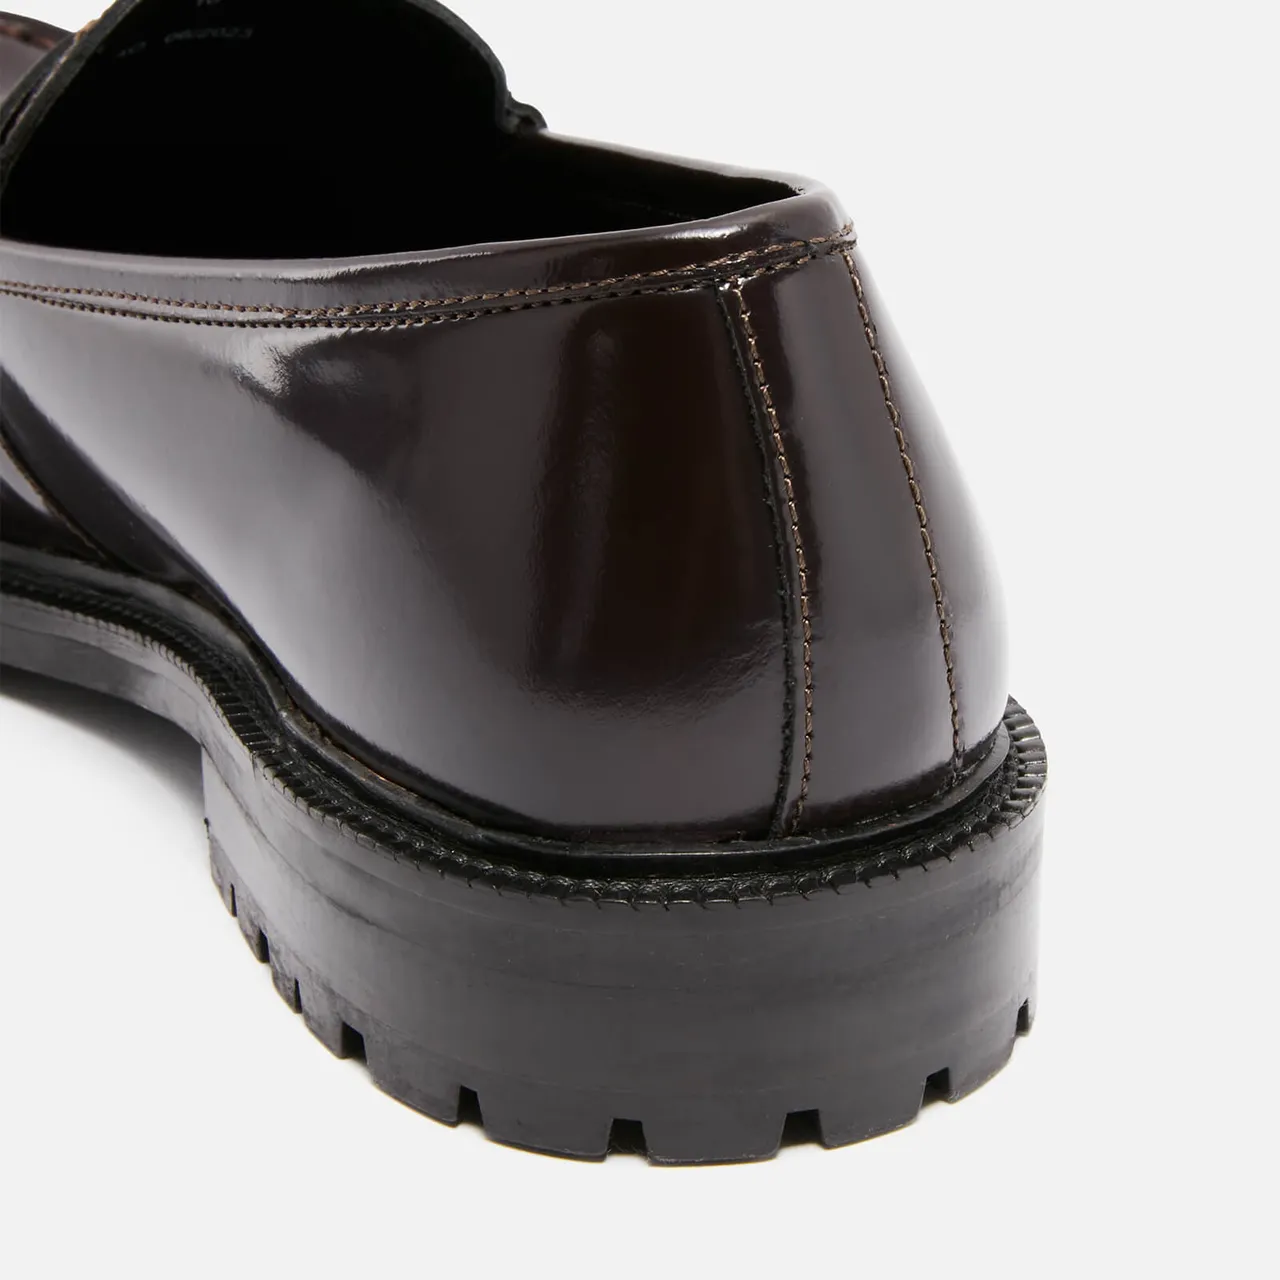 Walk London Men's Campus Leather Saddle Loafers - UK